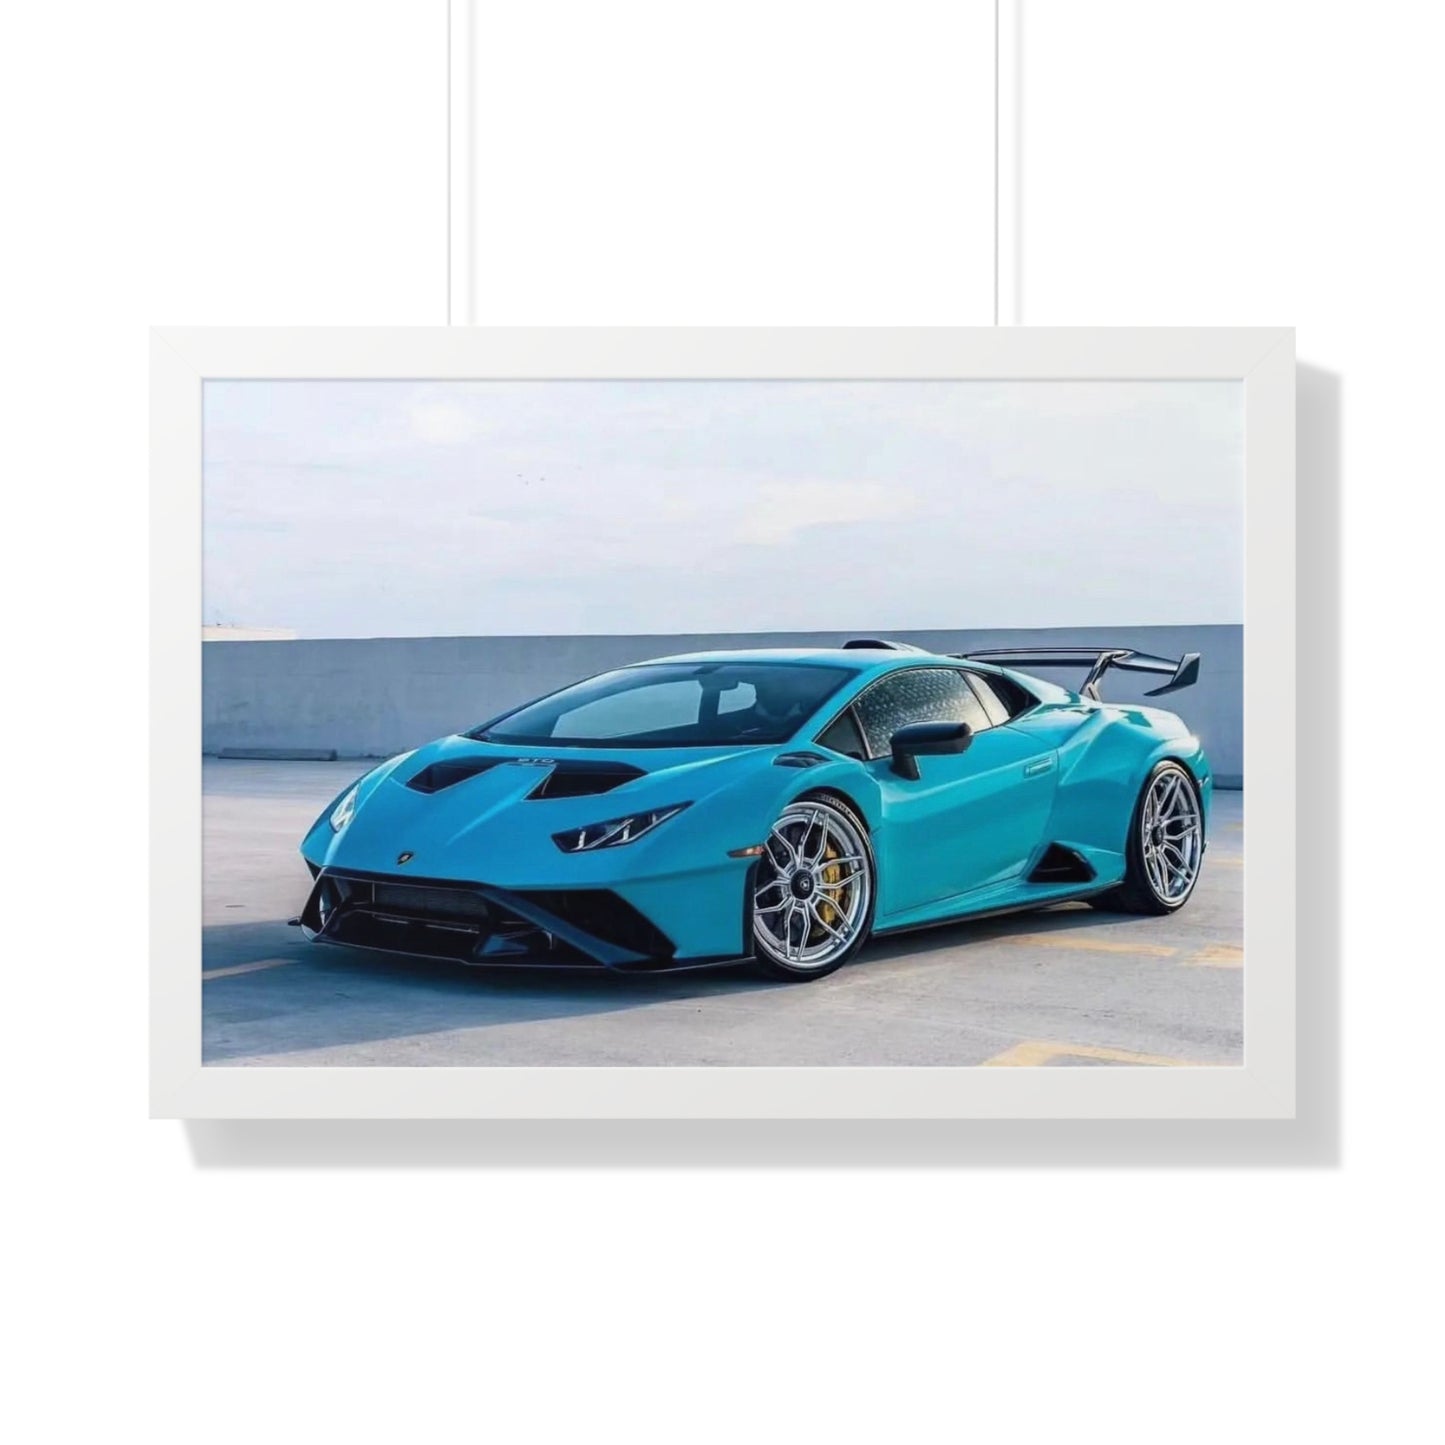 "Blue Skies" 30" x 20" Framed Lamborghini Poster